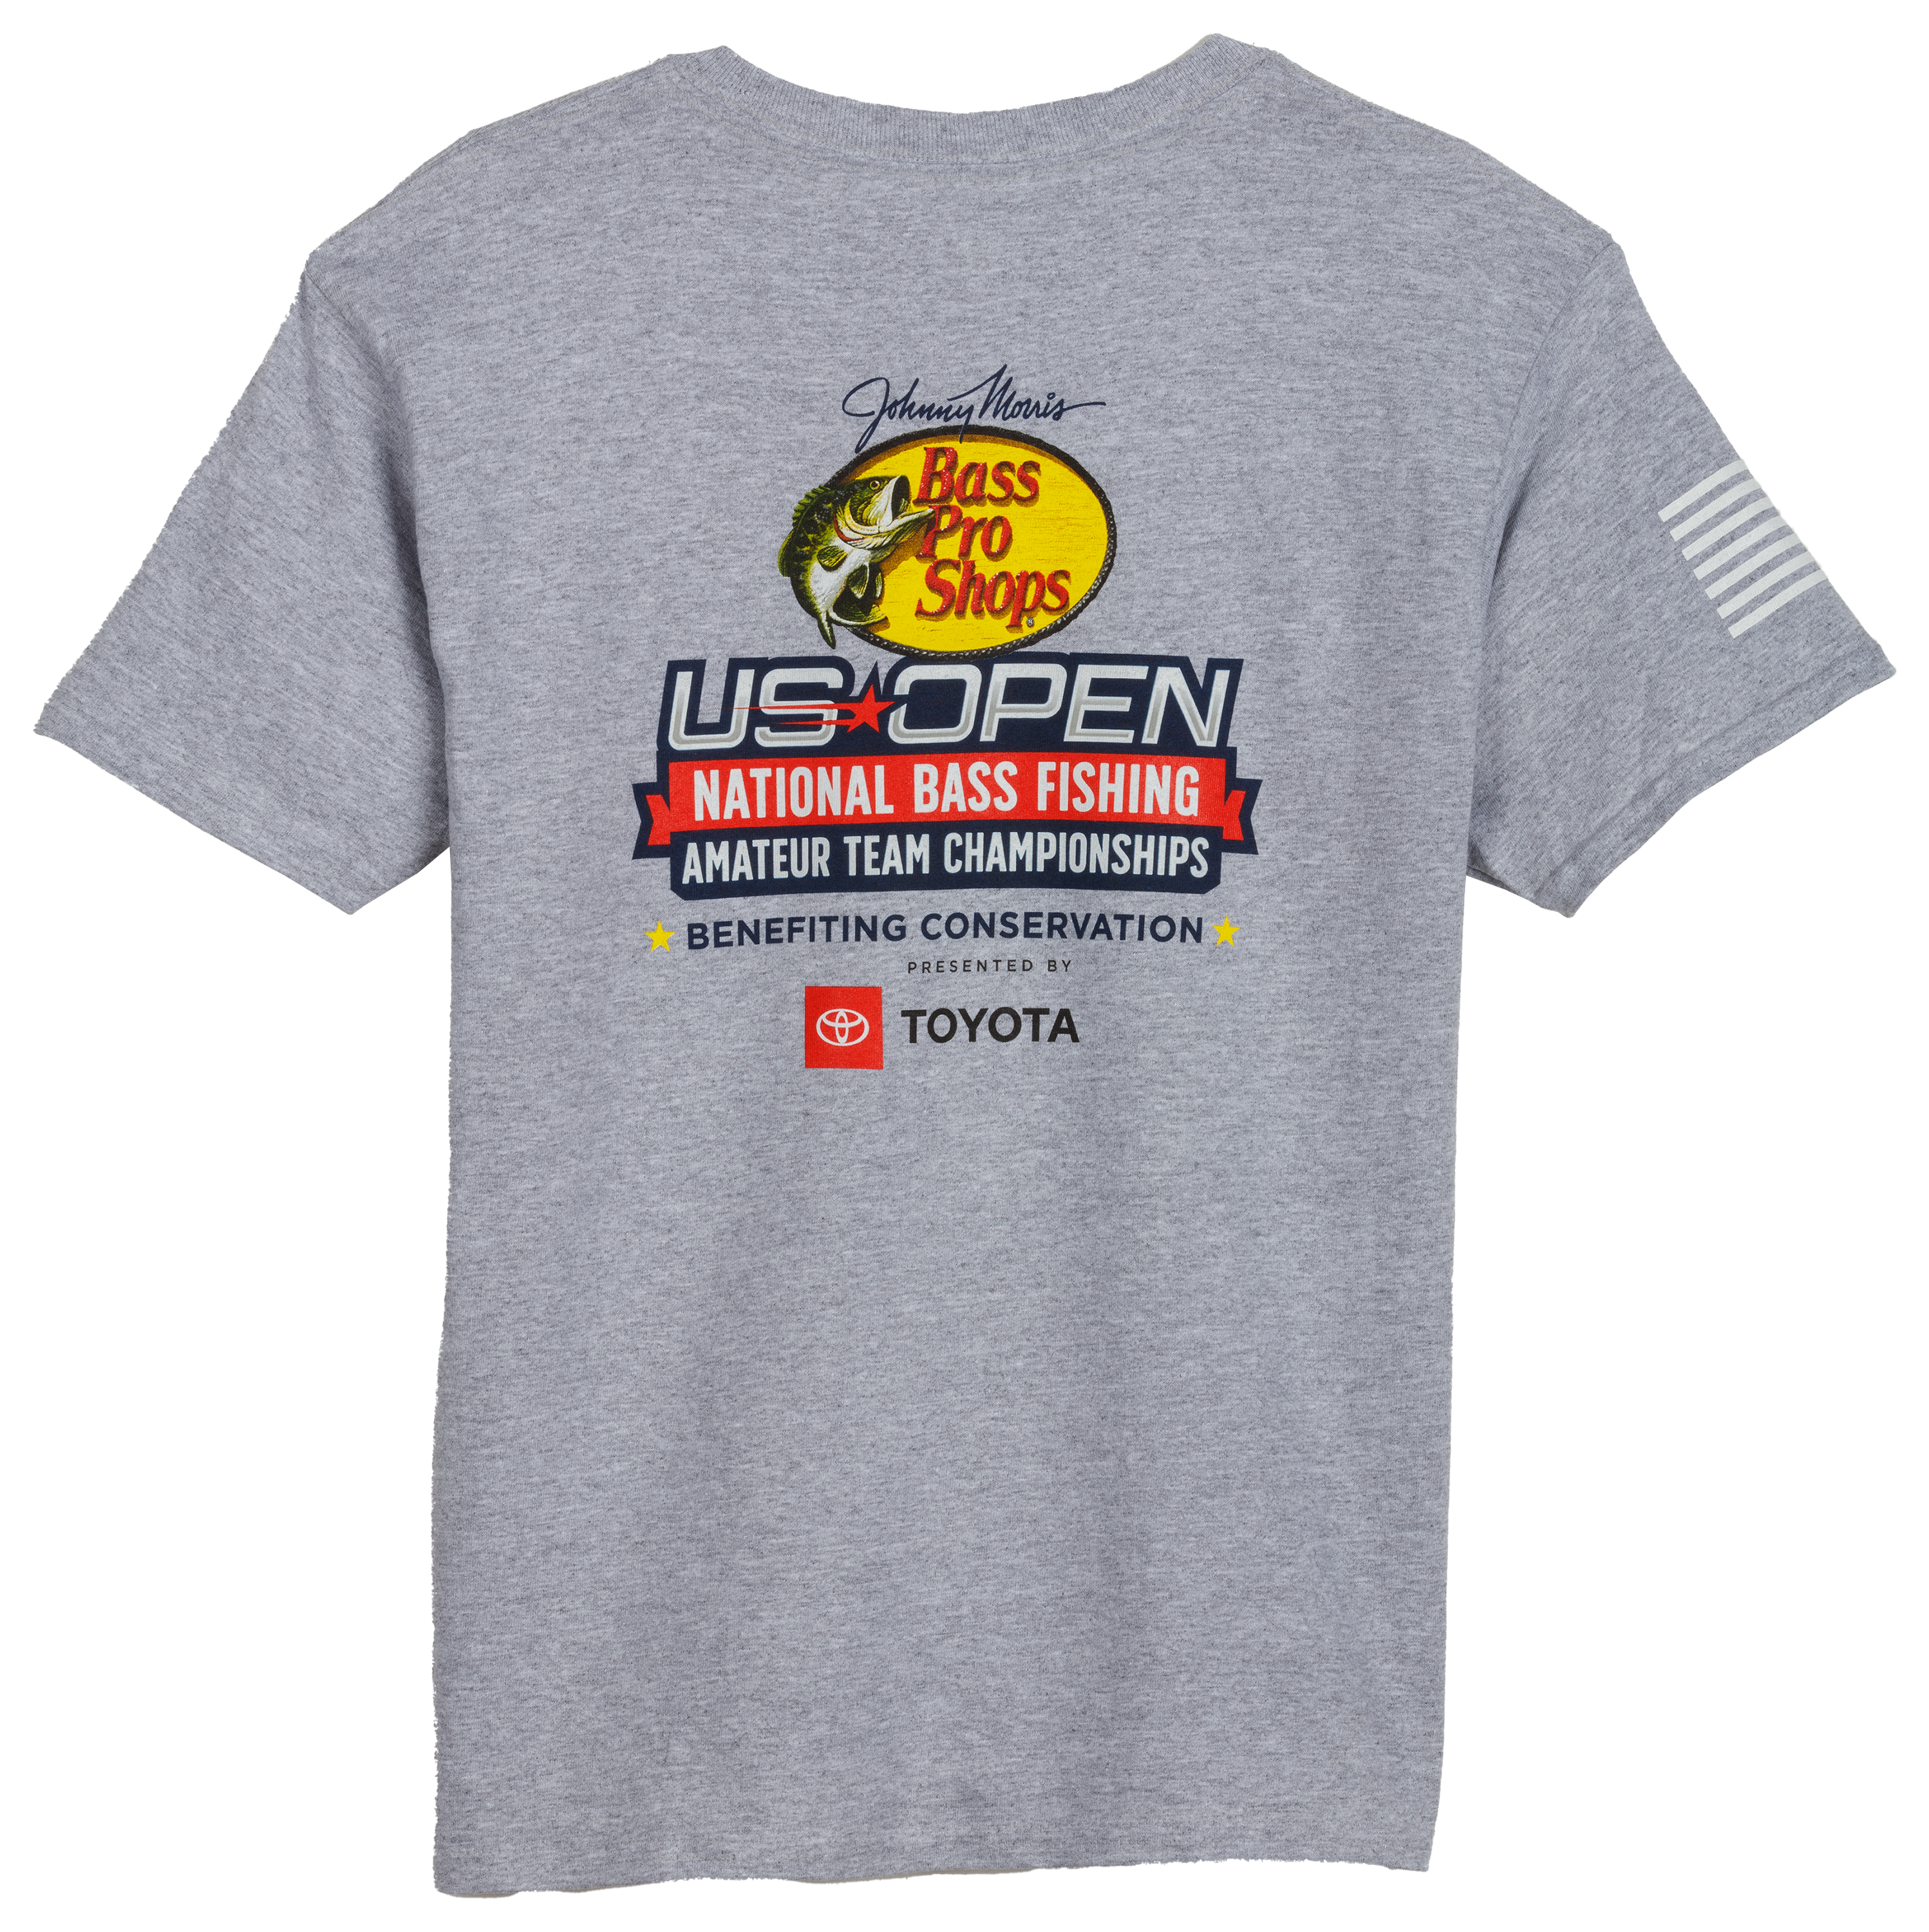 Bass Pro Shops US Open Short-Sleeve T-Shirt for Kids - Red - M